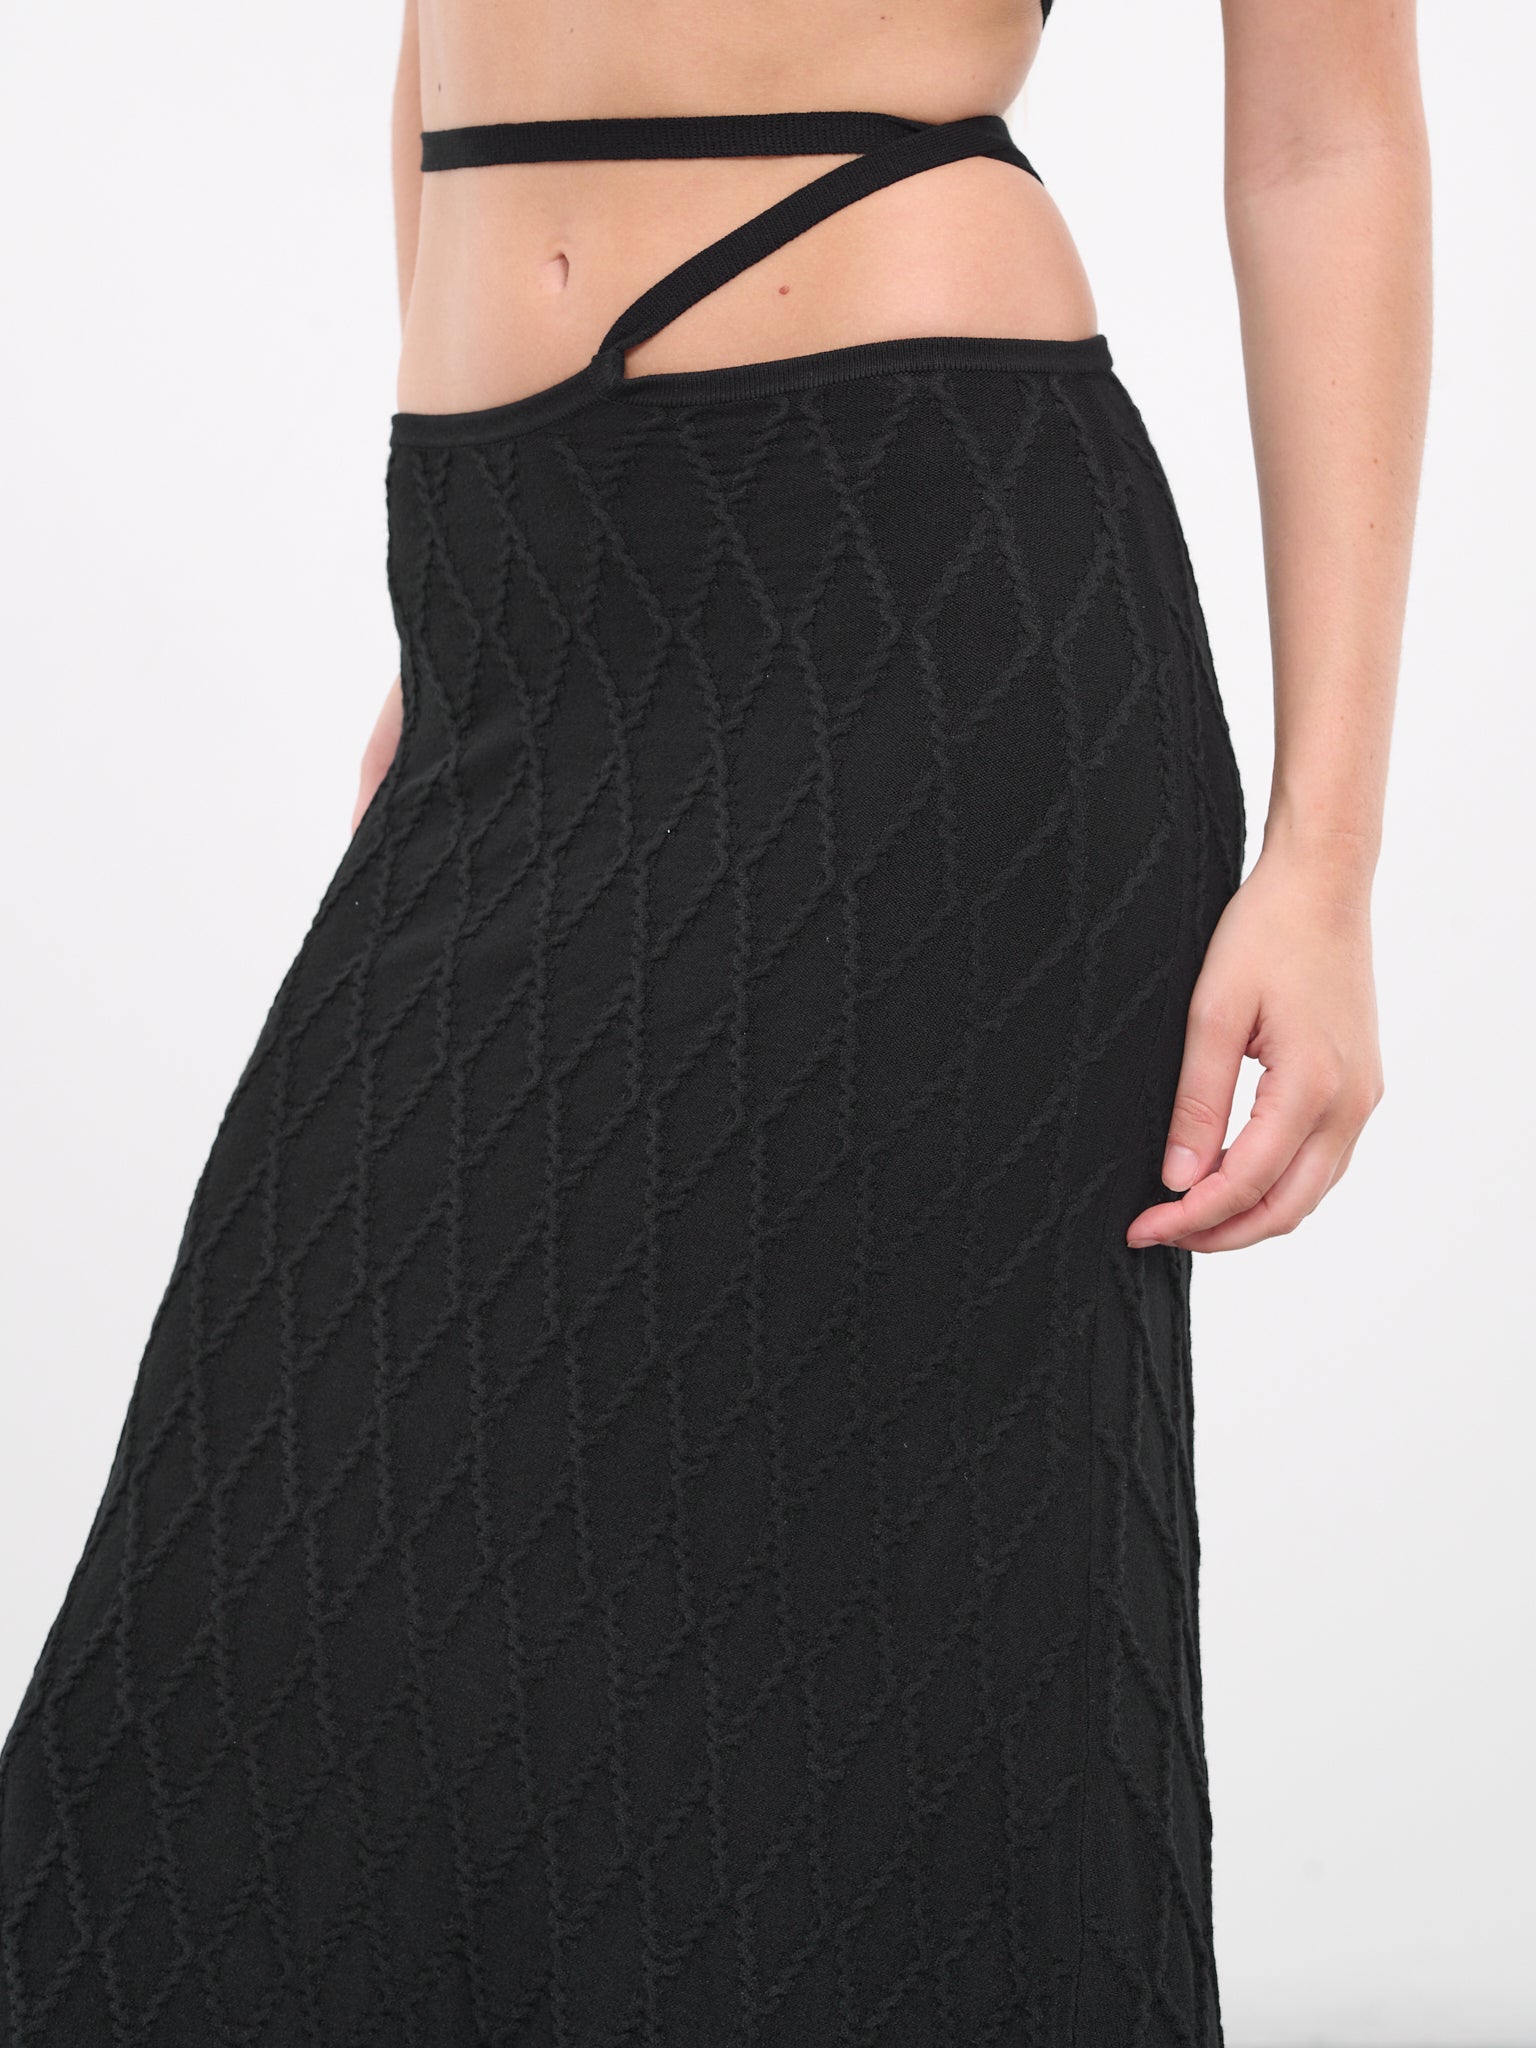 Salem Skirt (999-902-BLACK)